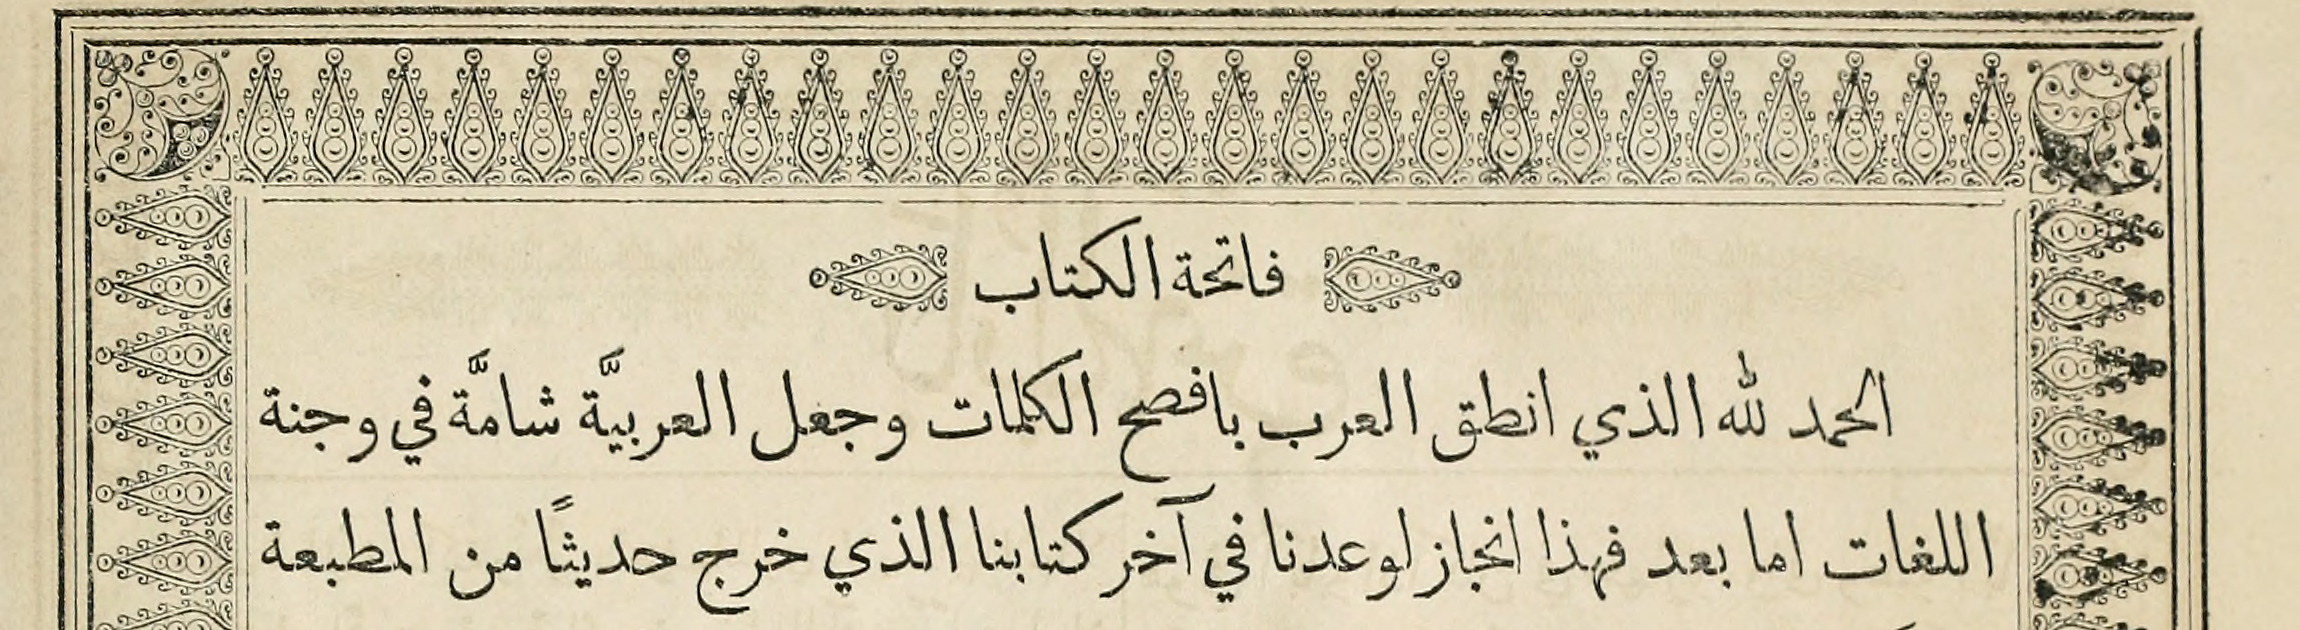 Detail of kitab muhit al muhit